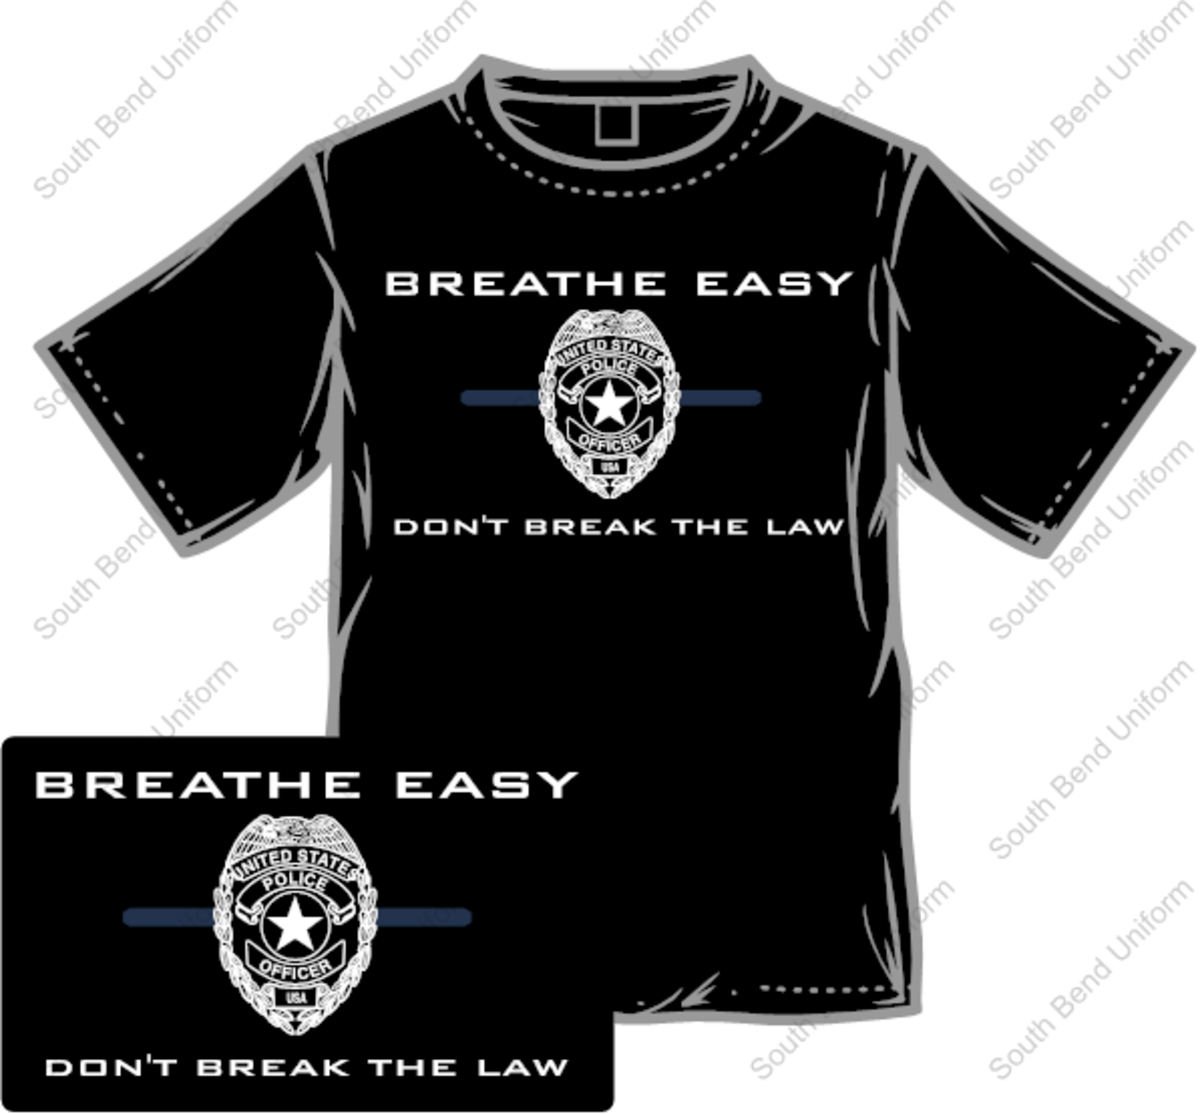 Breathe-easy-shirt